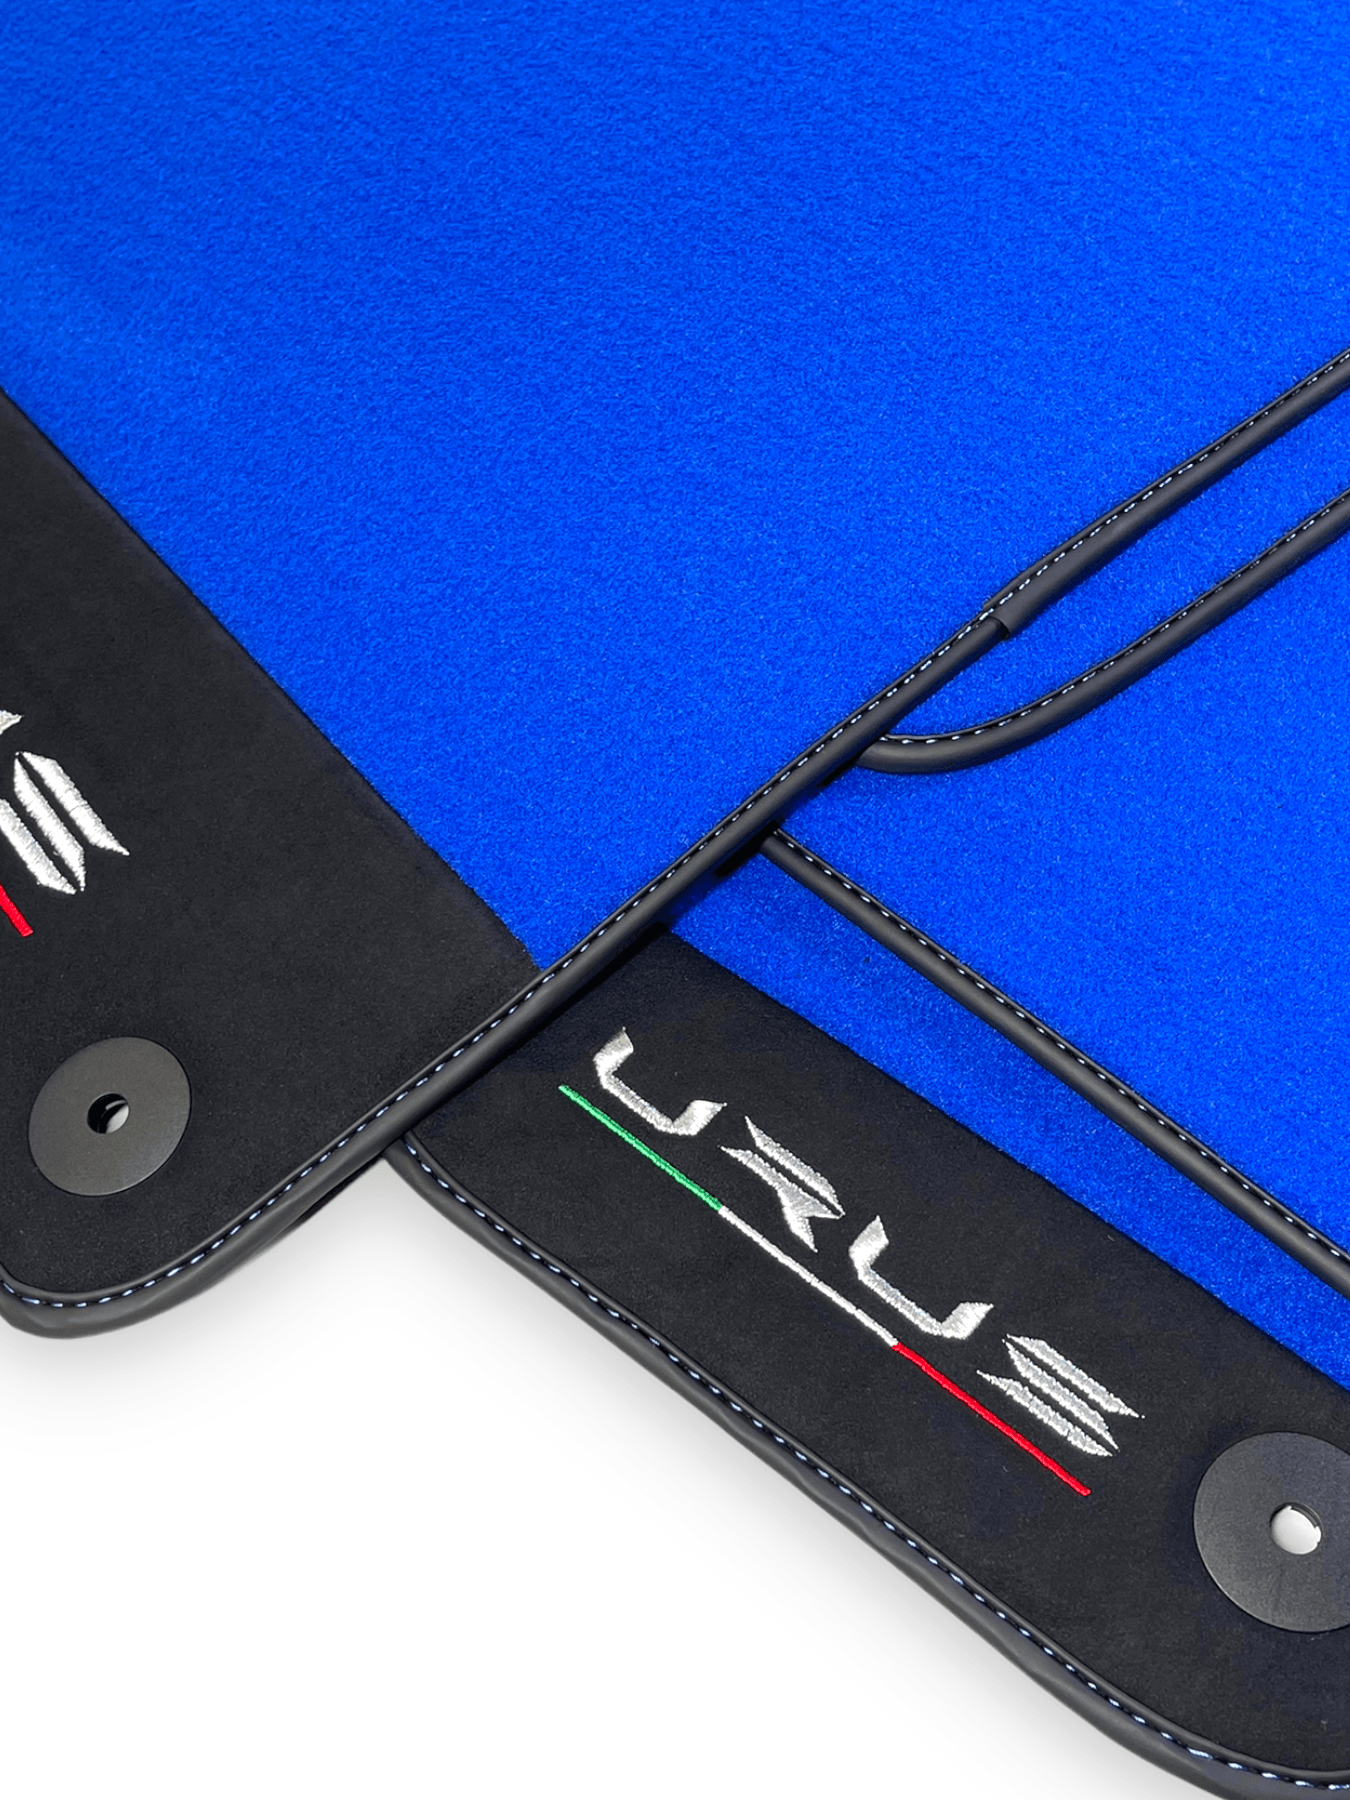 Blue Floor Mats For Lamborghini Urus With Alcantara Leather - AutoWin